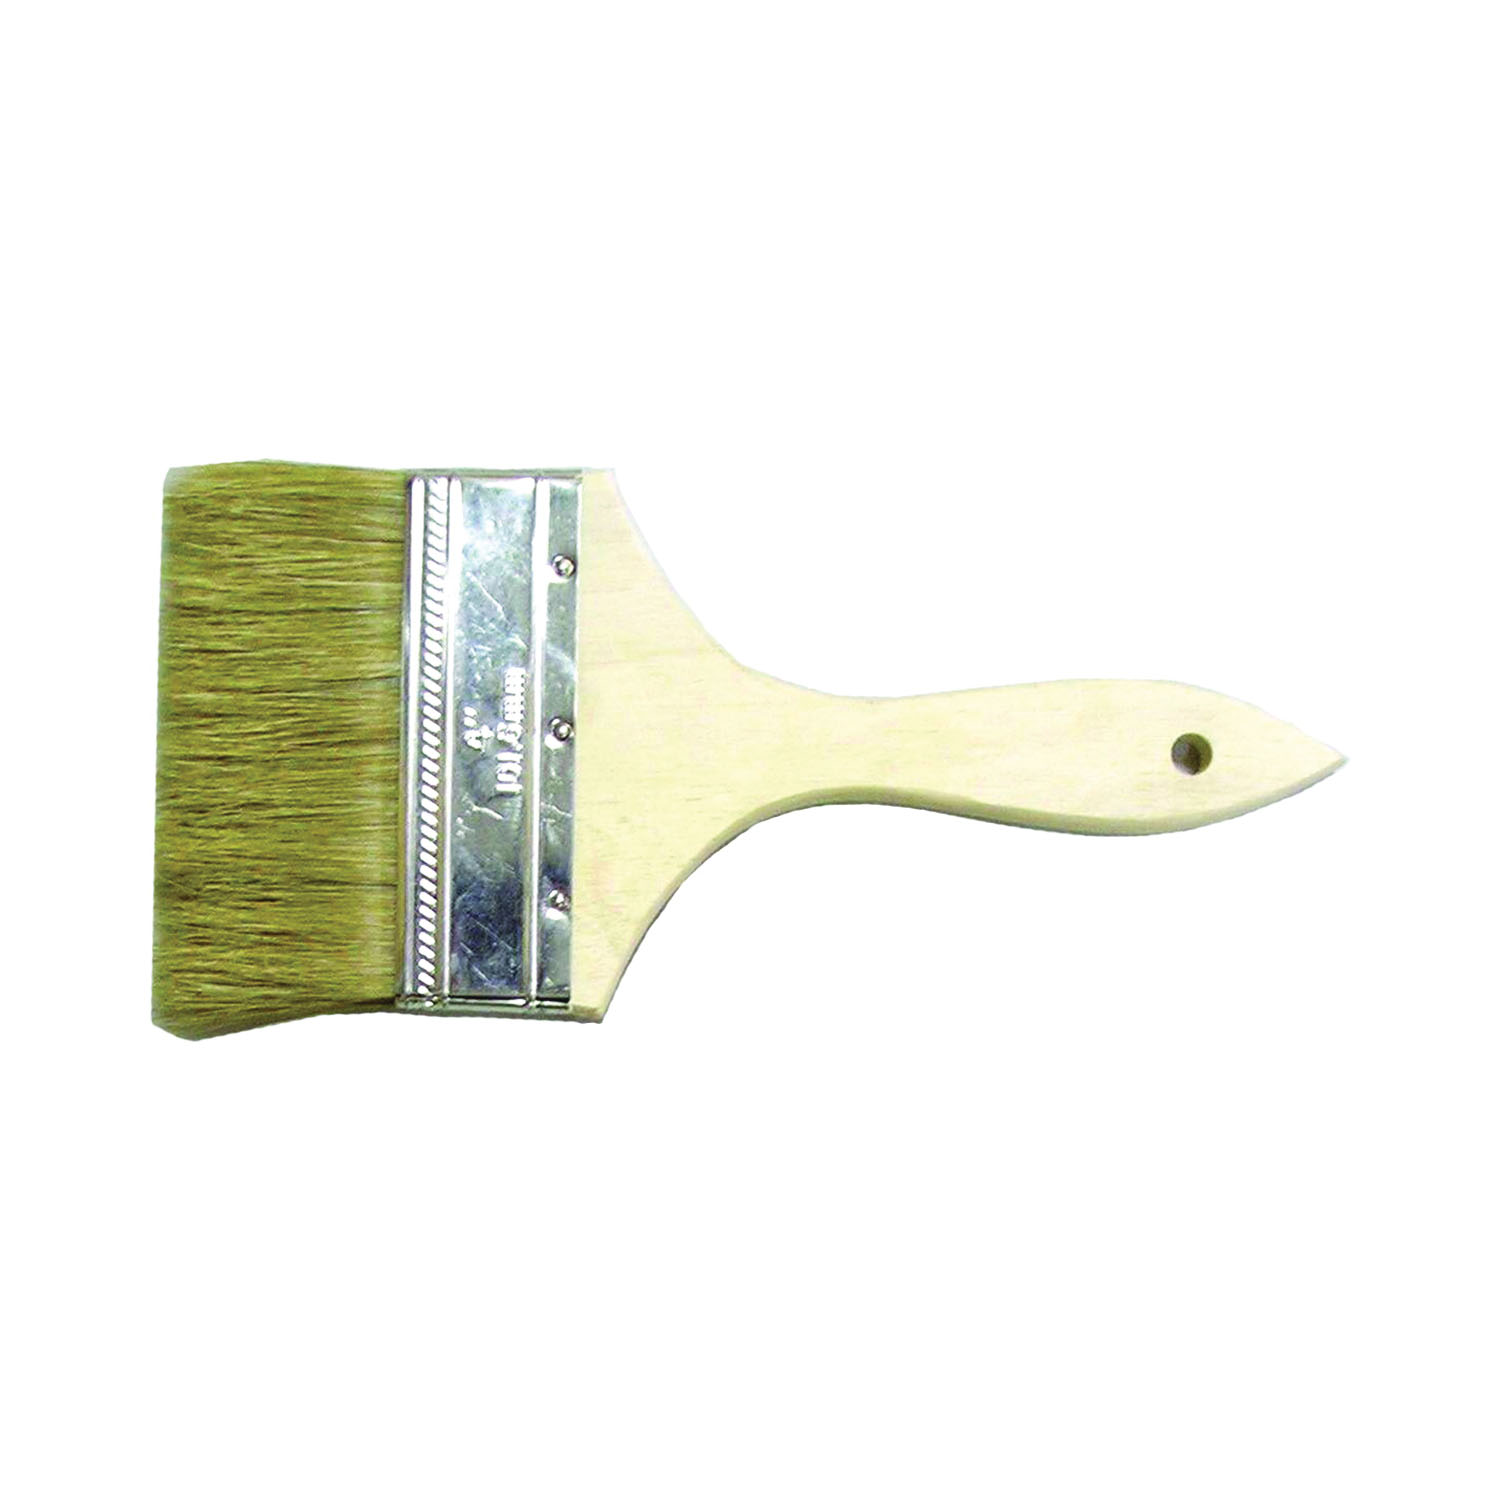 150040 Chip Paint Brush, 4 in W, Plain-Grip Handle